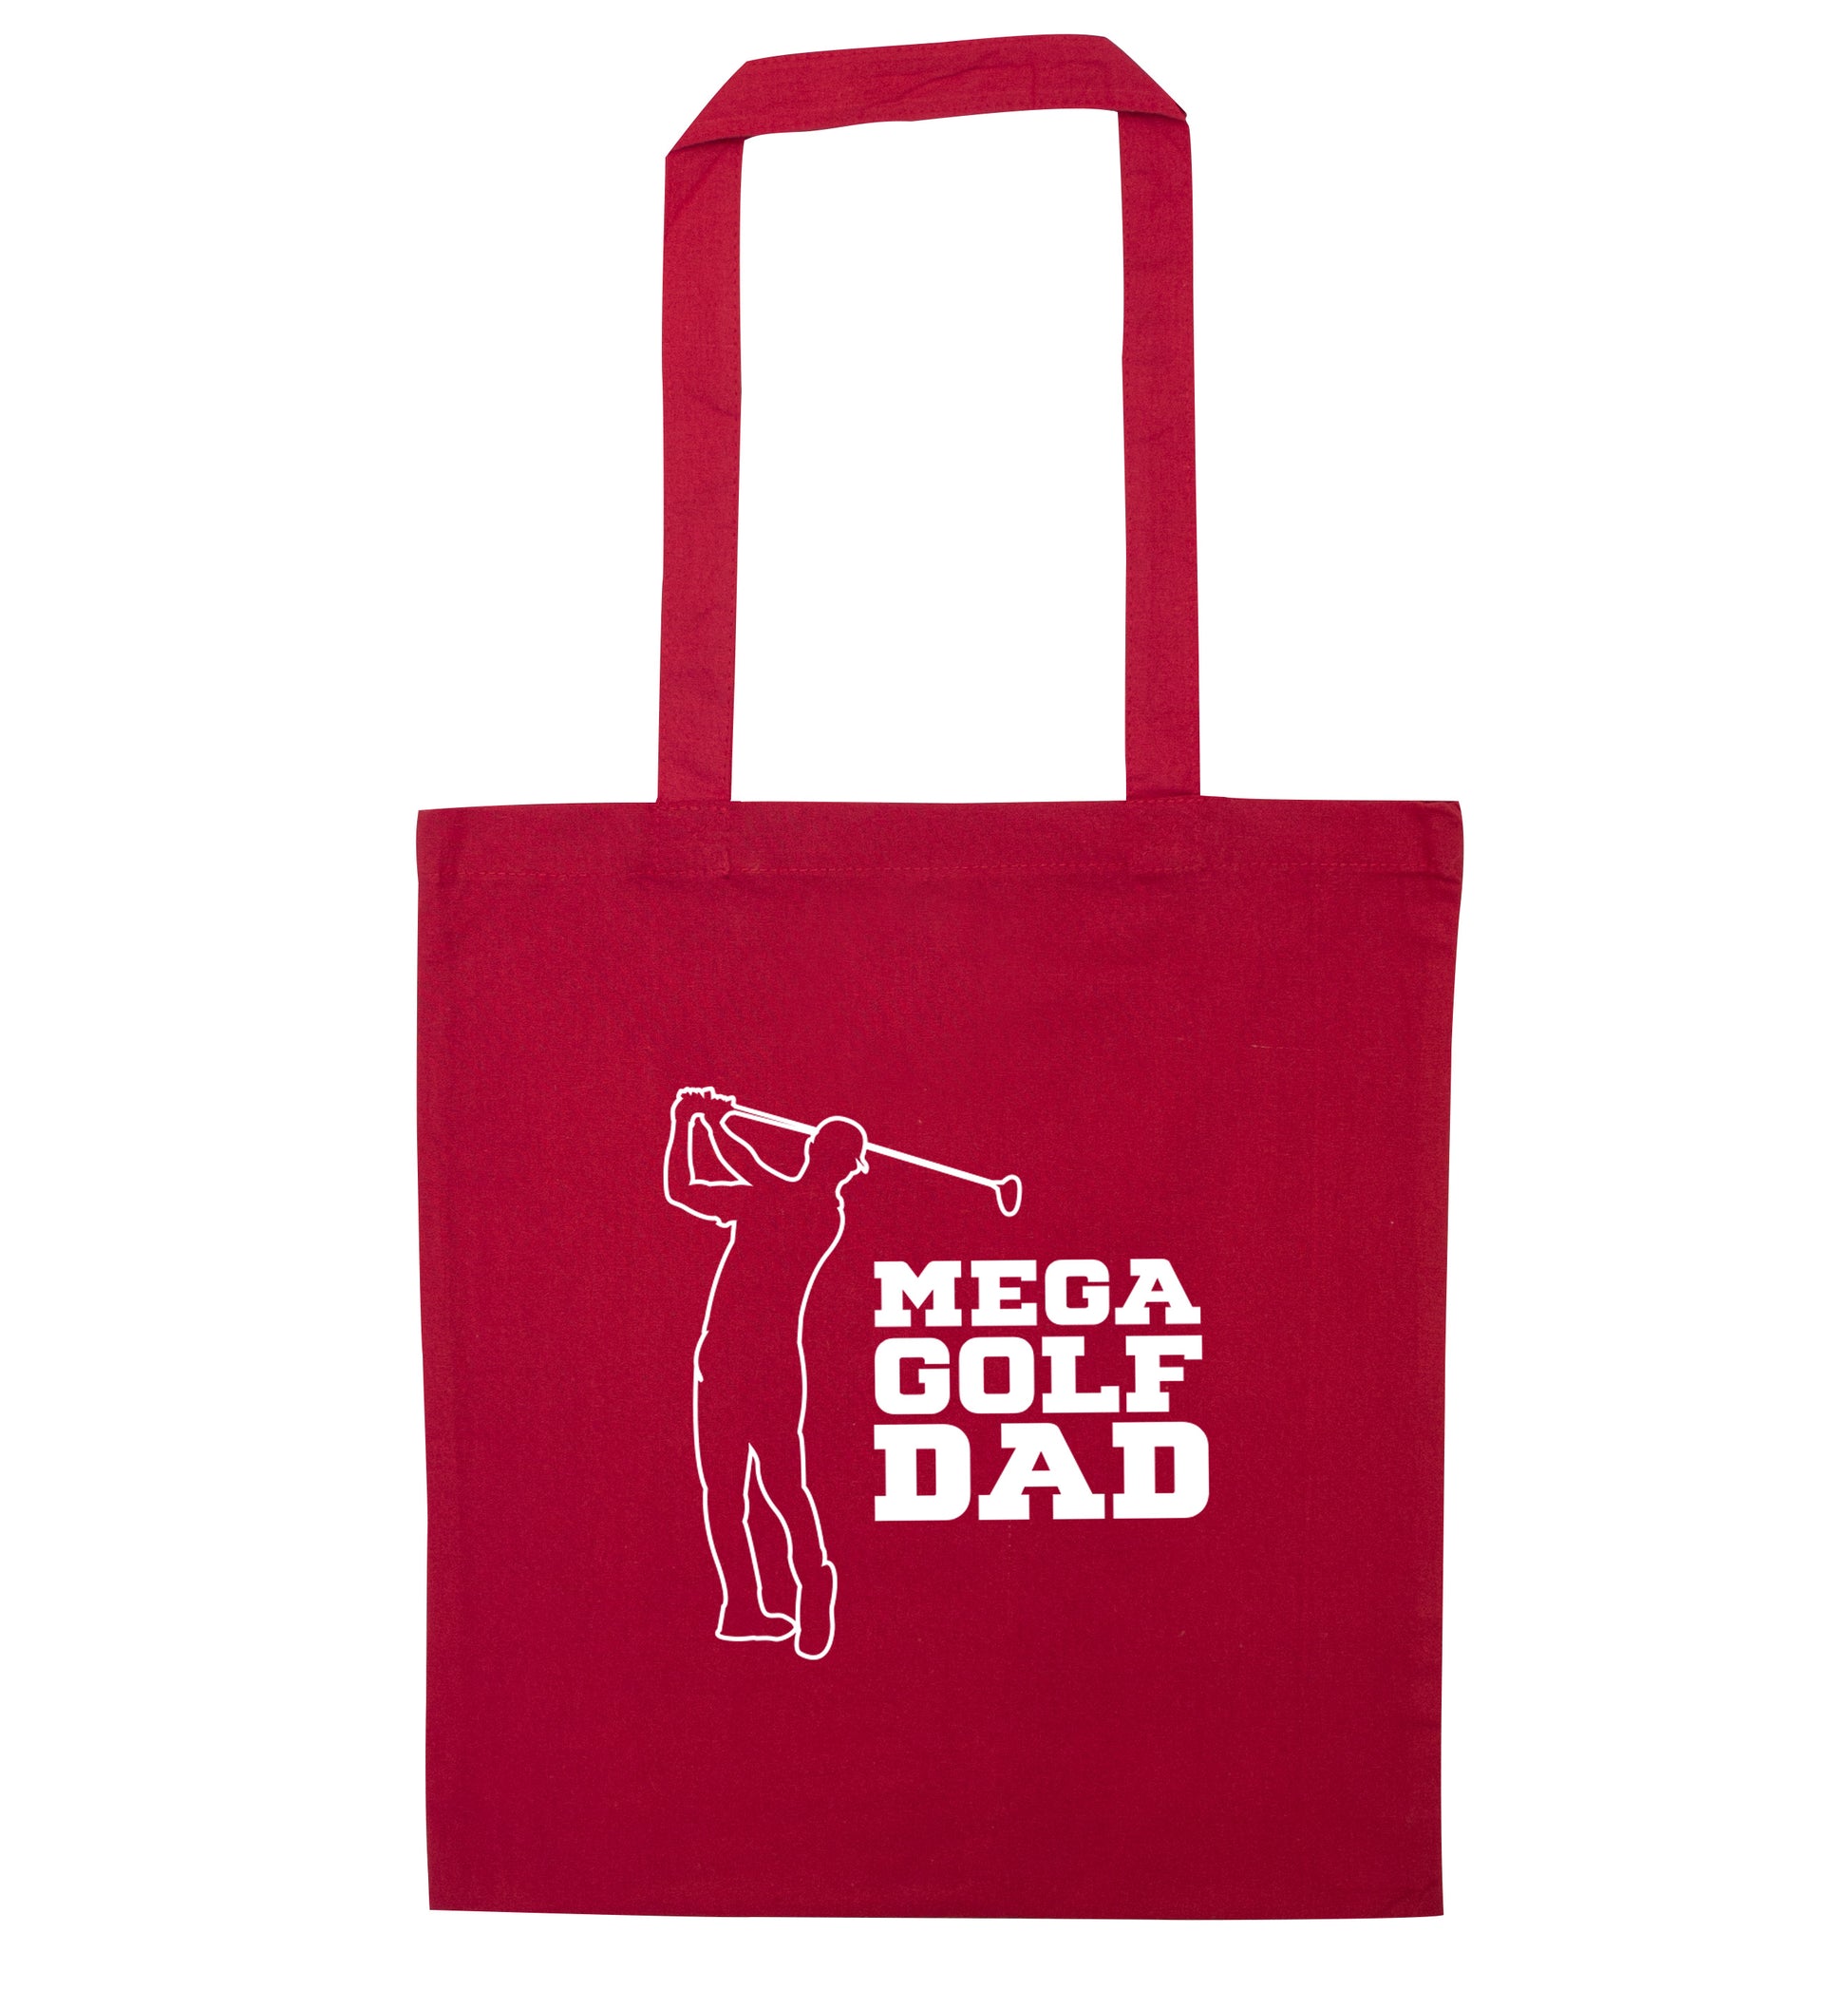 Mega golfing dad red tote bag